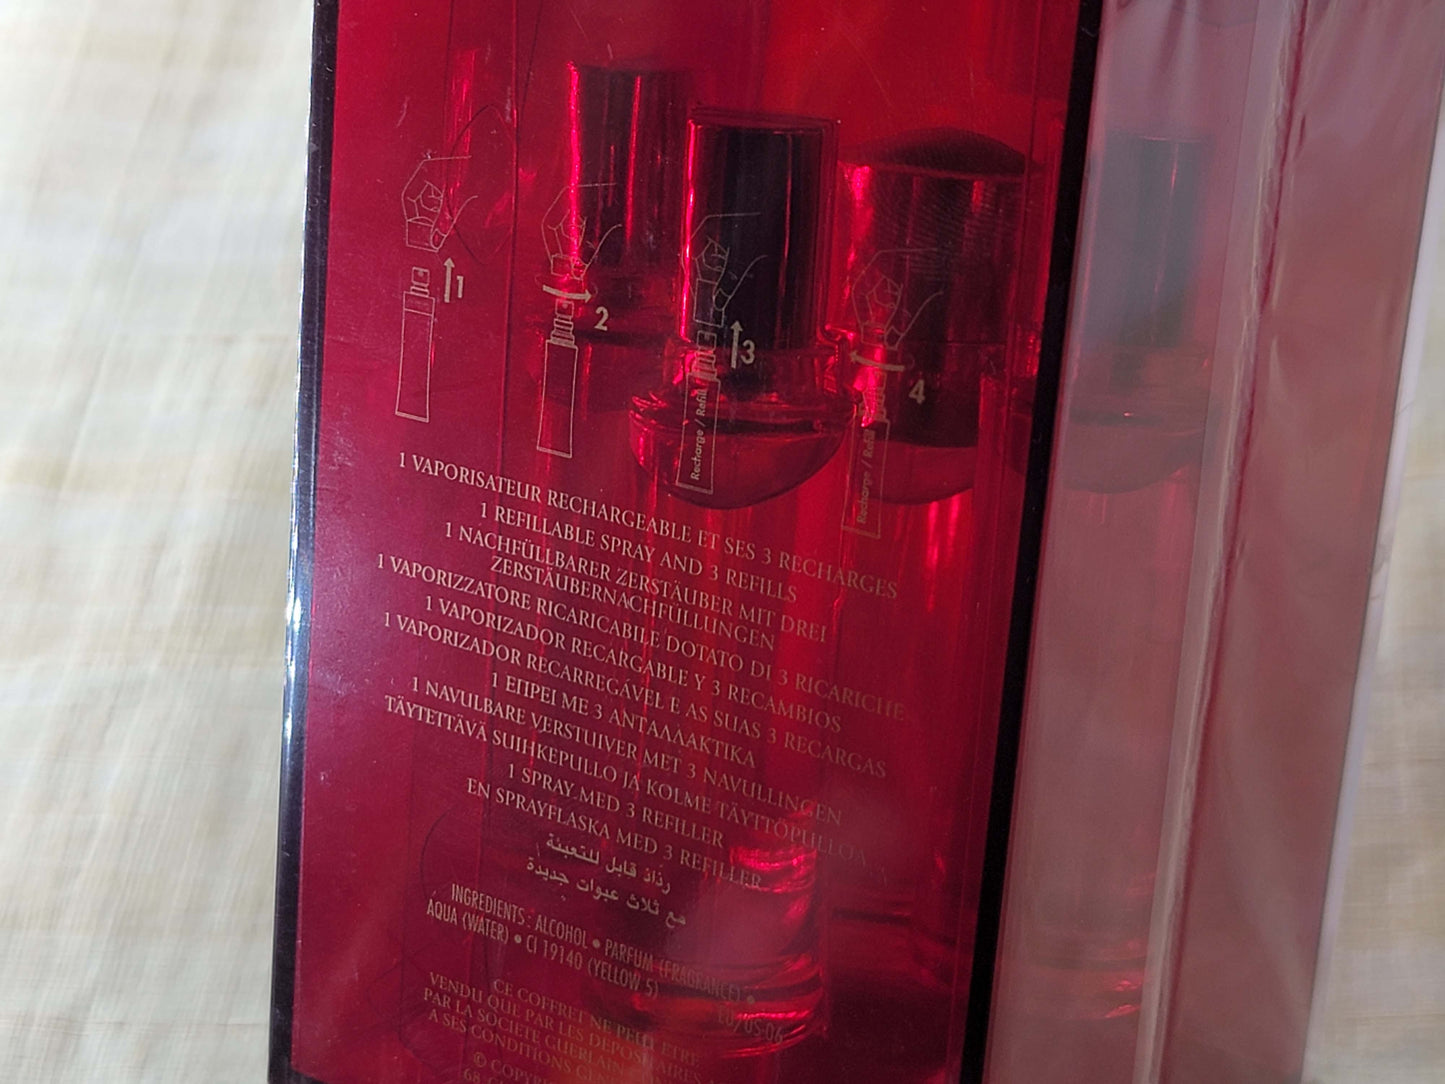 Samsara Guerlain for women EDT Purse Spray 4 × 15 ml e 4 × 0.5 FLOZ, Rare, Vintage